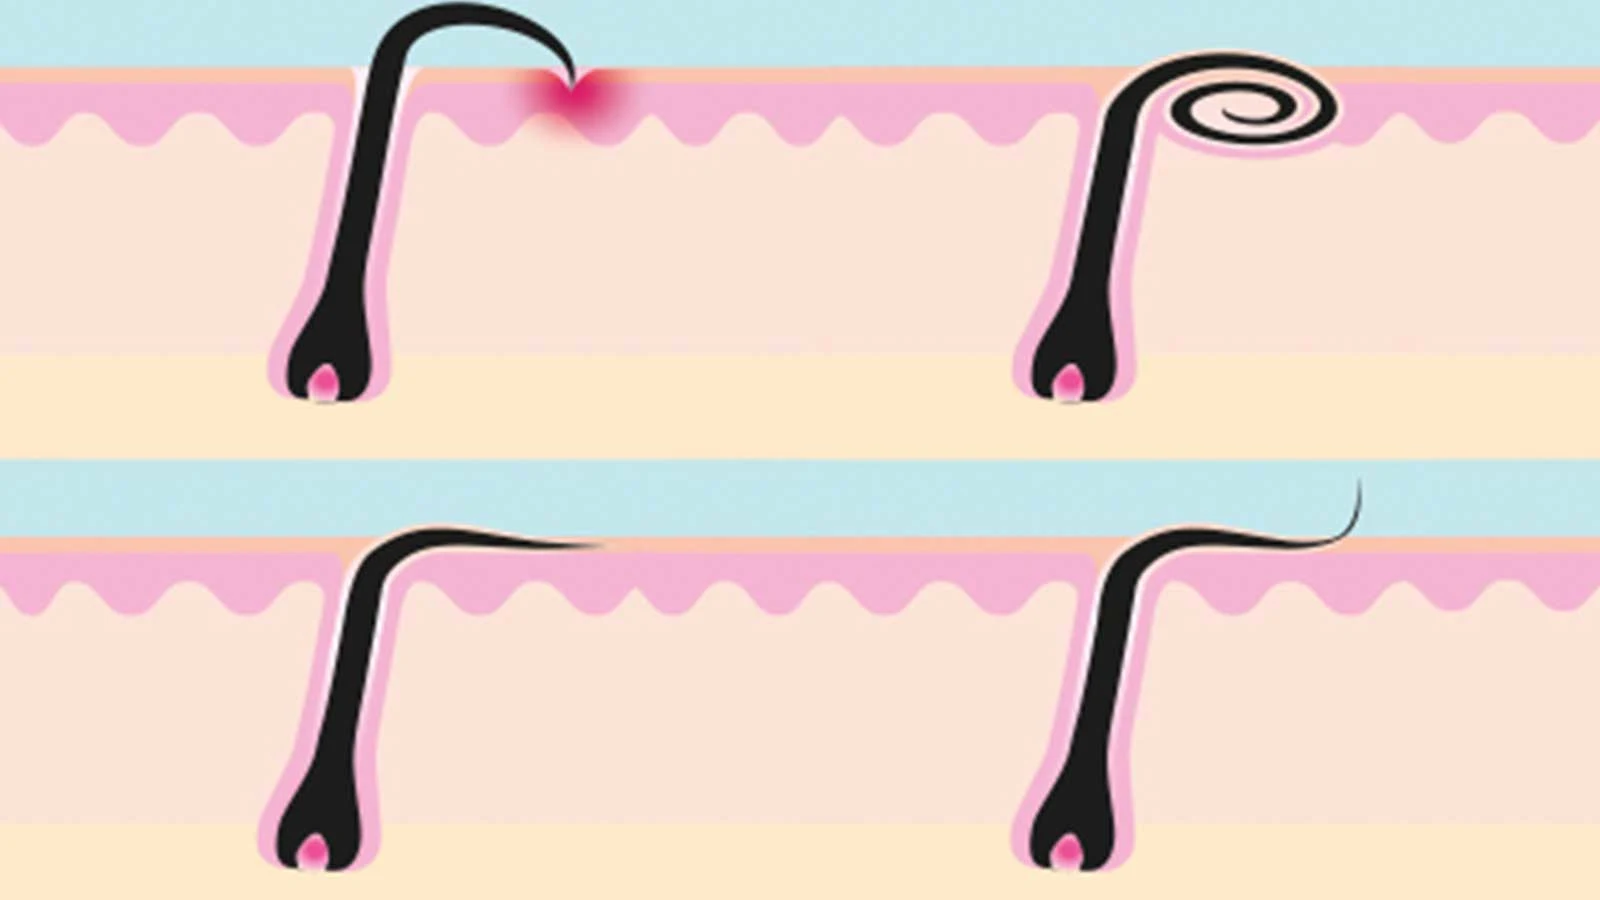 Illustrations of three types of ingrown hairs